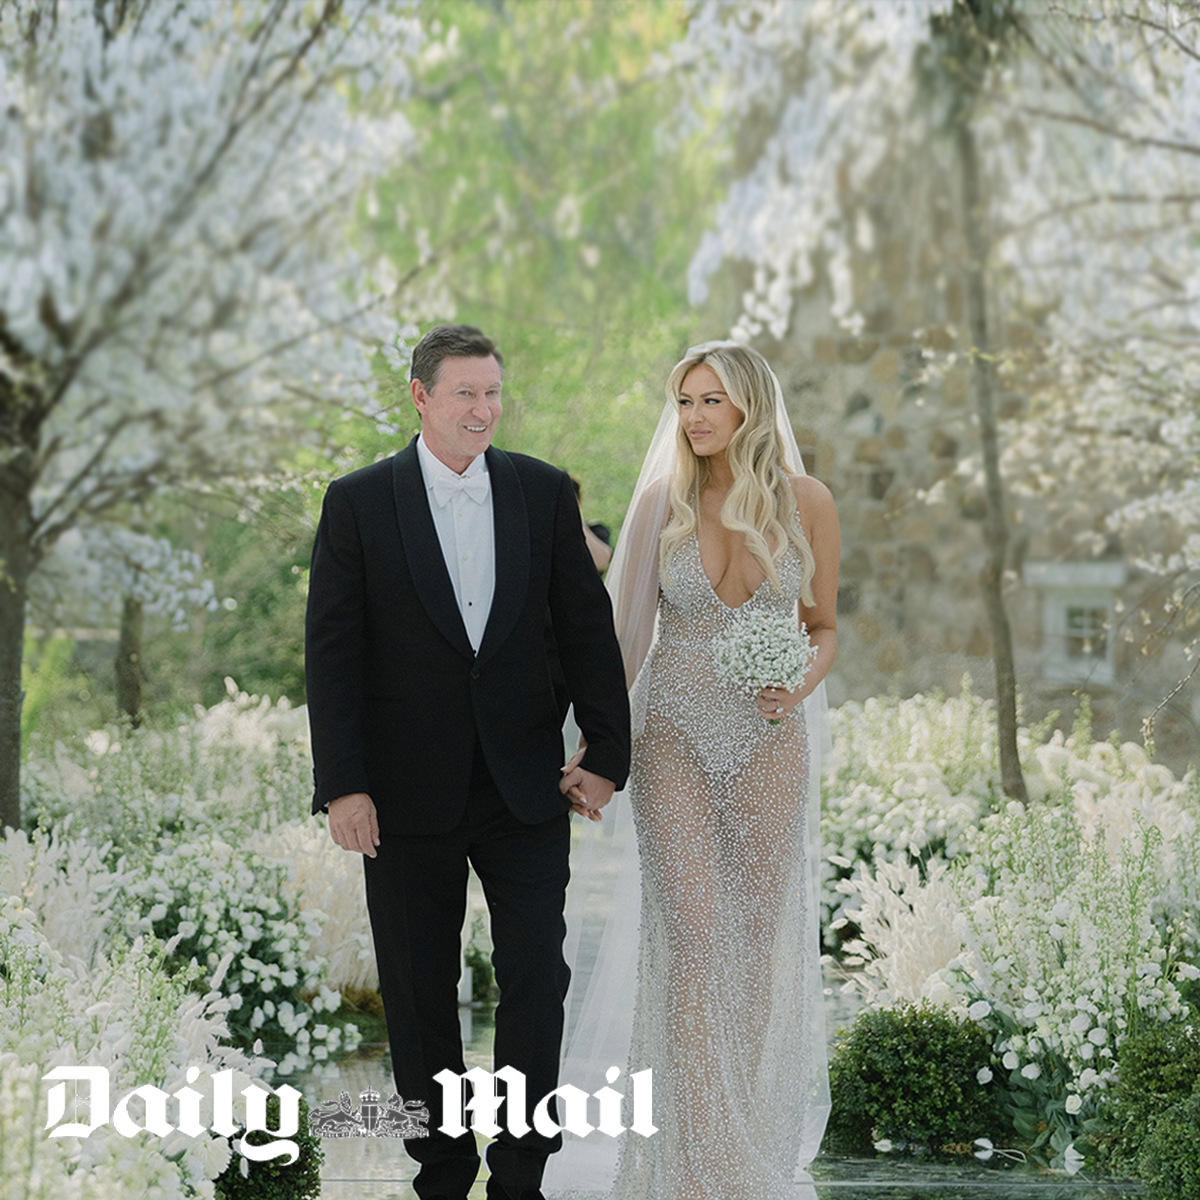 Photos: Dustin Johnson, Paulina Gretzky's Luxury Wedding in Tennessee